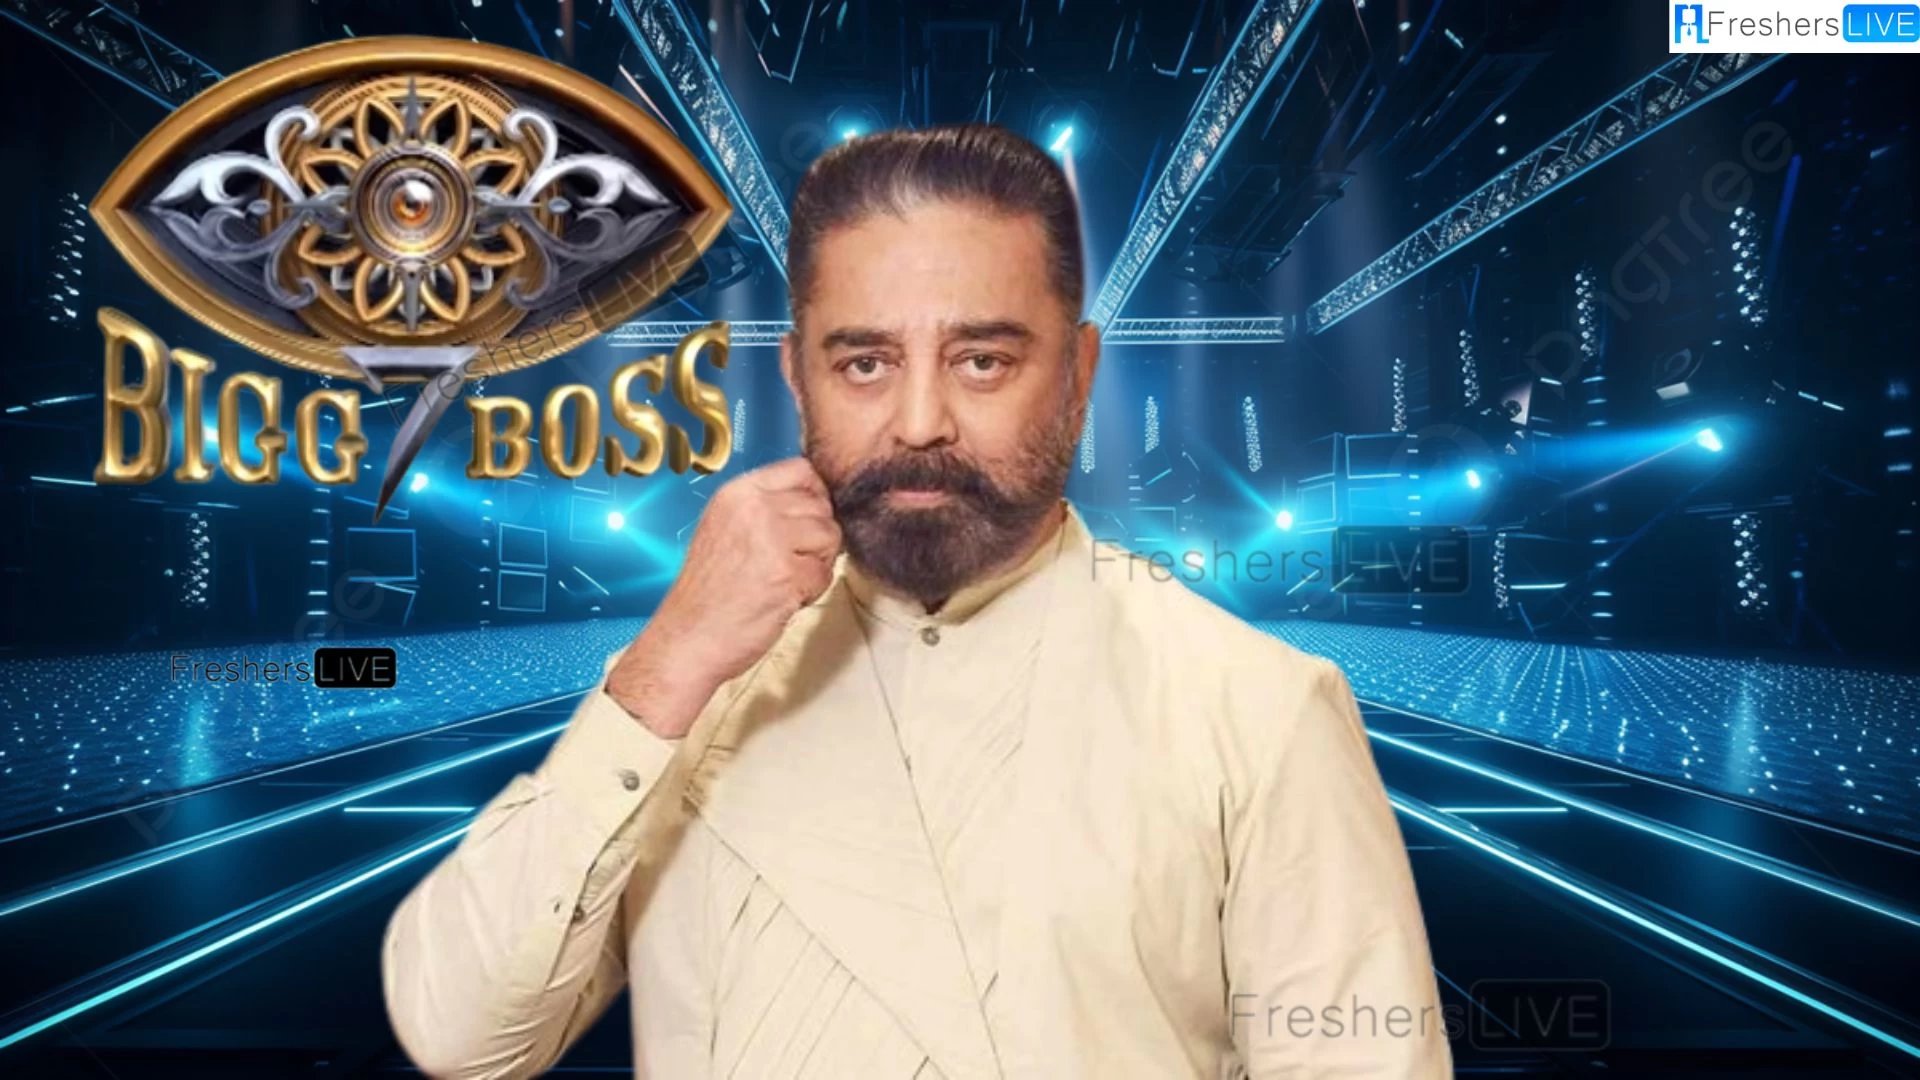 Bigg Boss Tamil Vote Season 7 Online Voting and Results, How to Vote Bigg Boss Tamil Season 7?